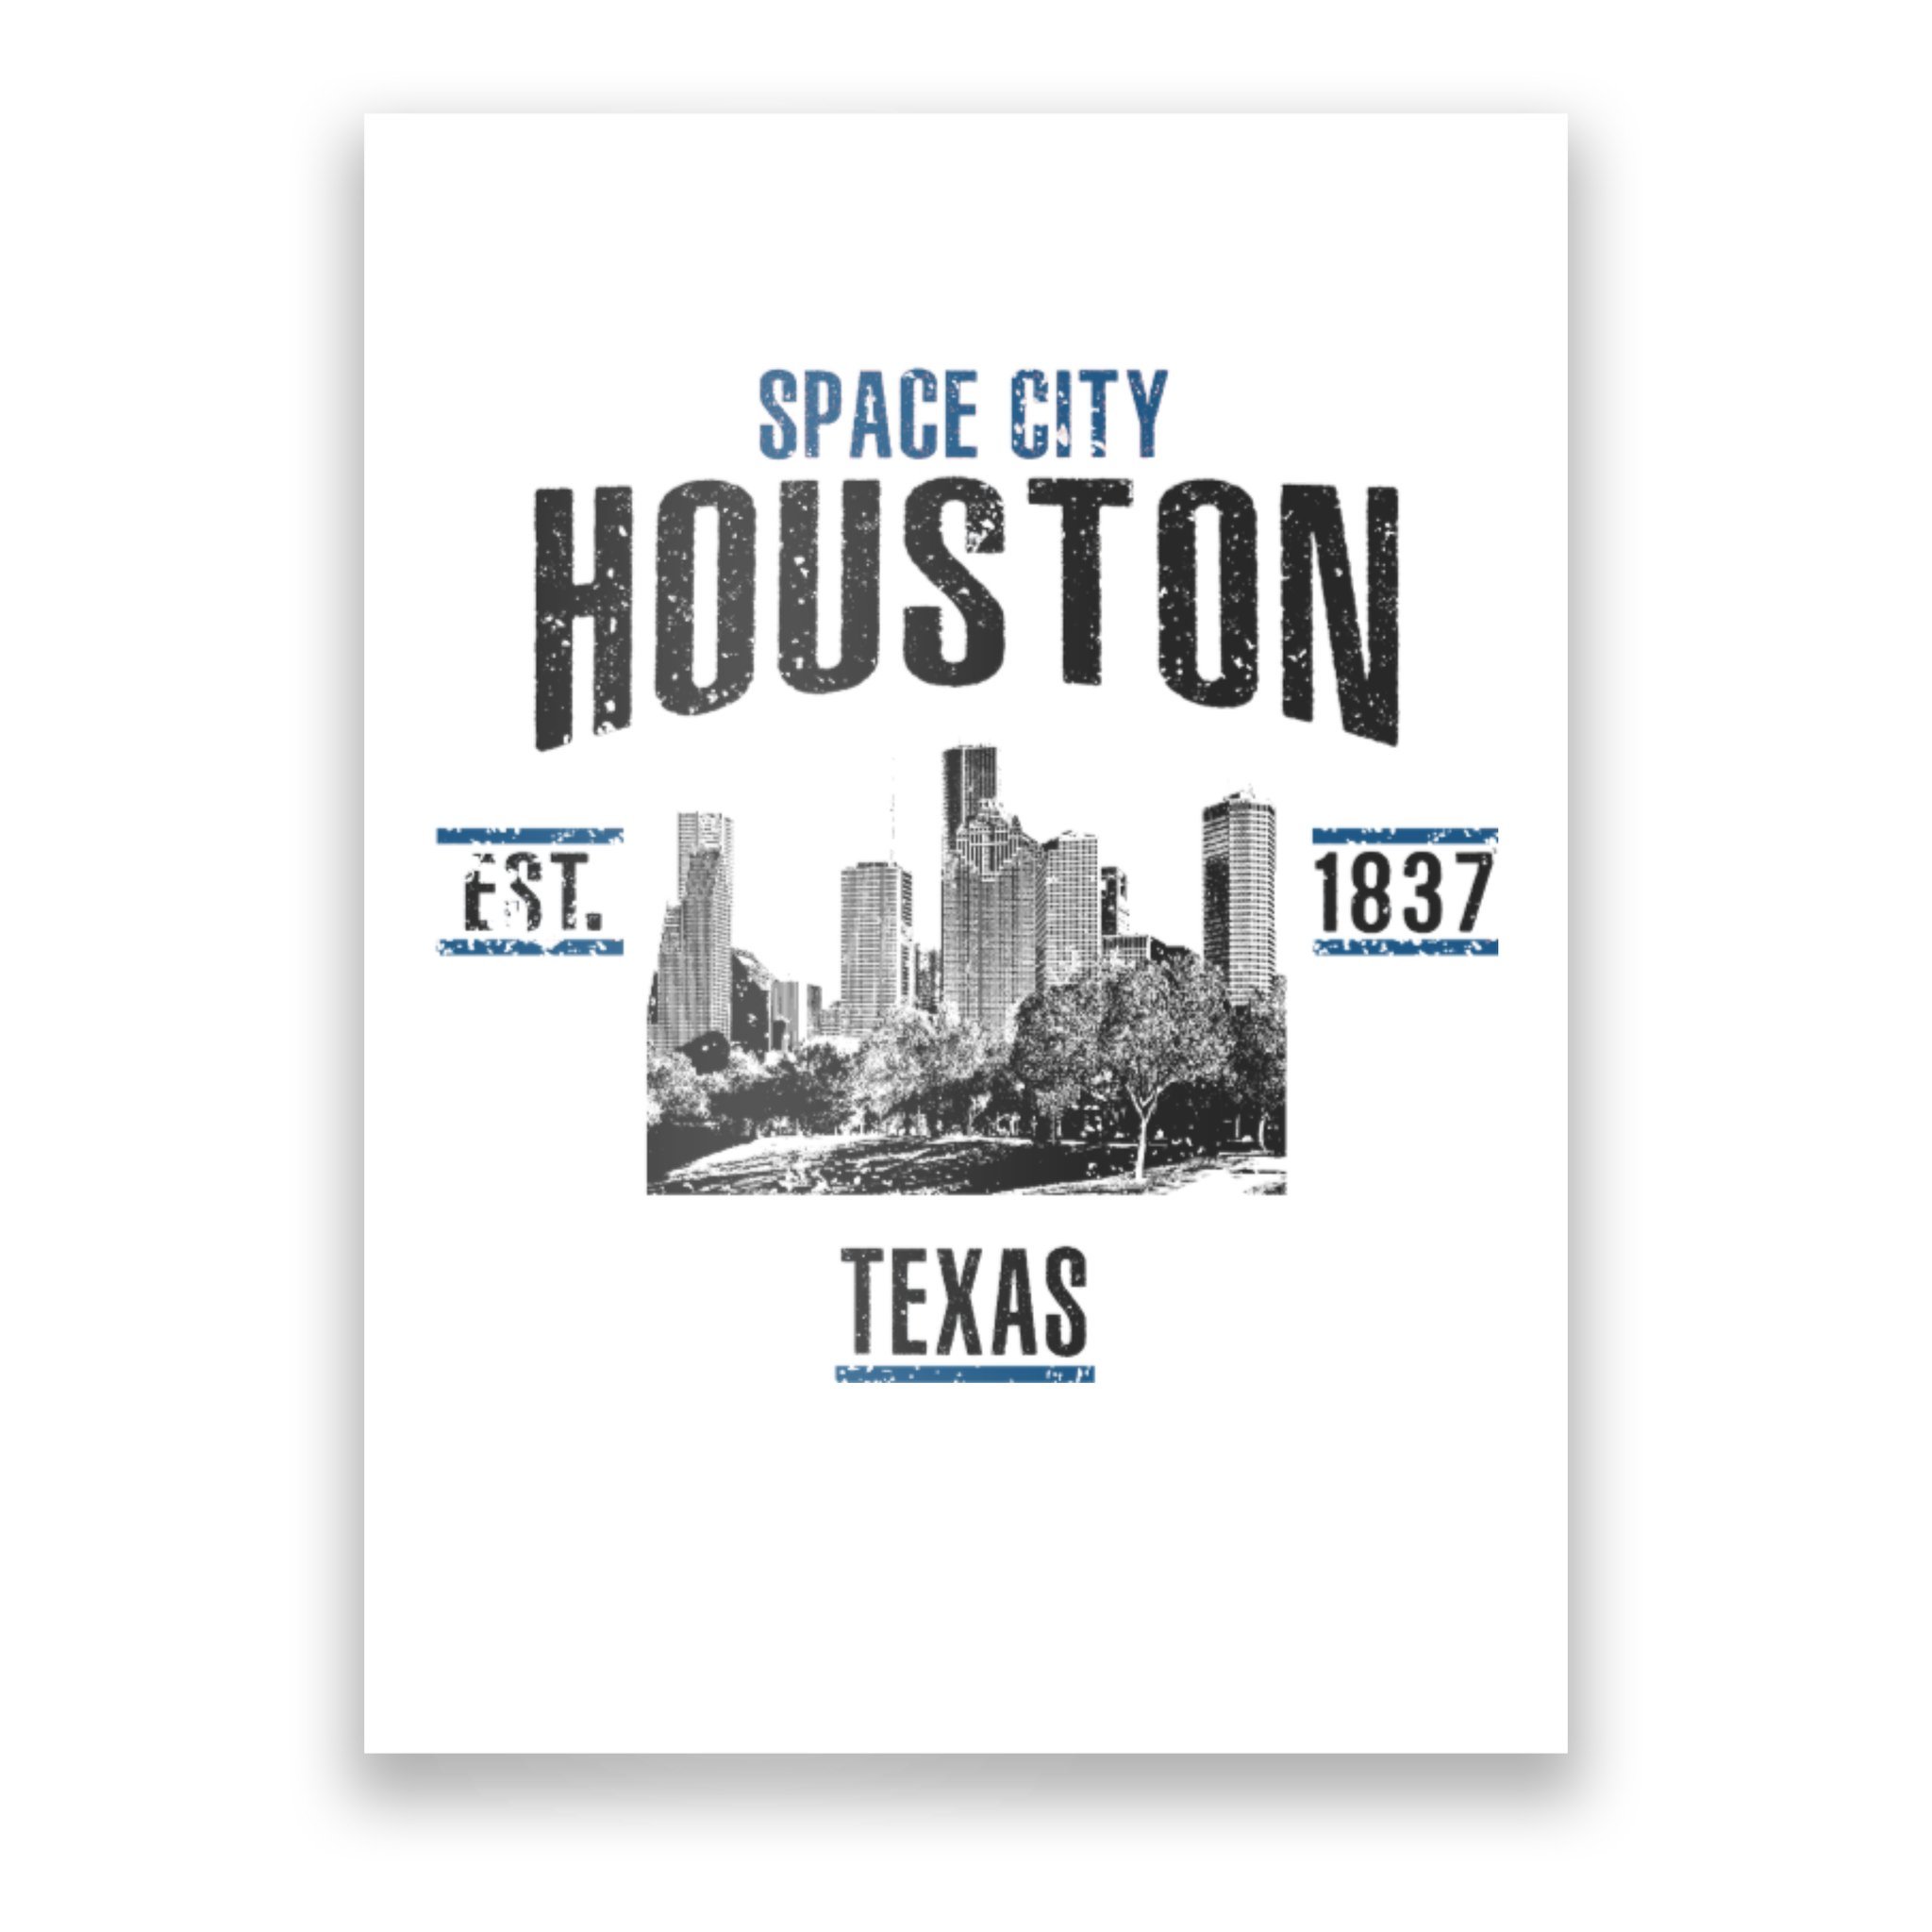 Space City Houston Est 1837 Texas Poster